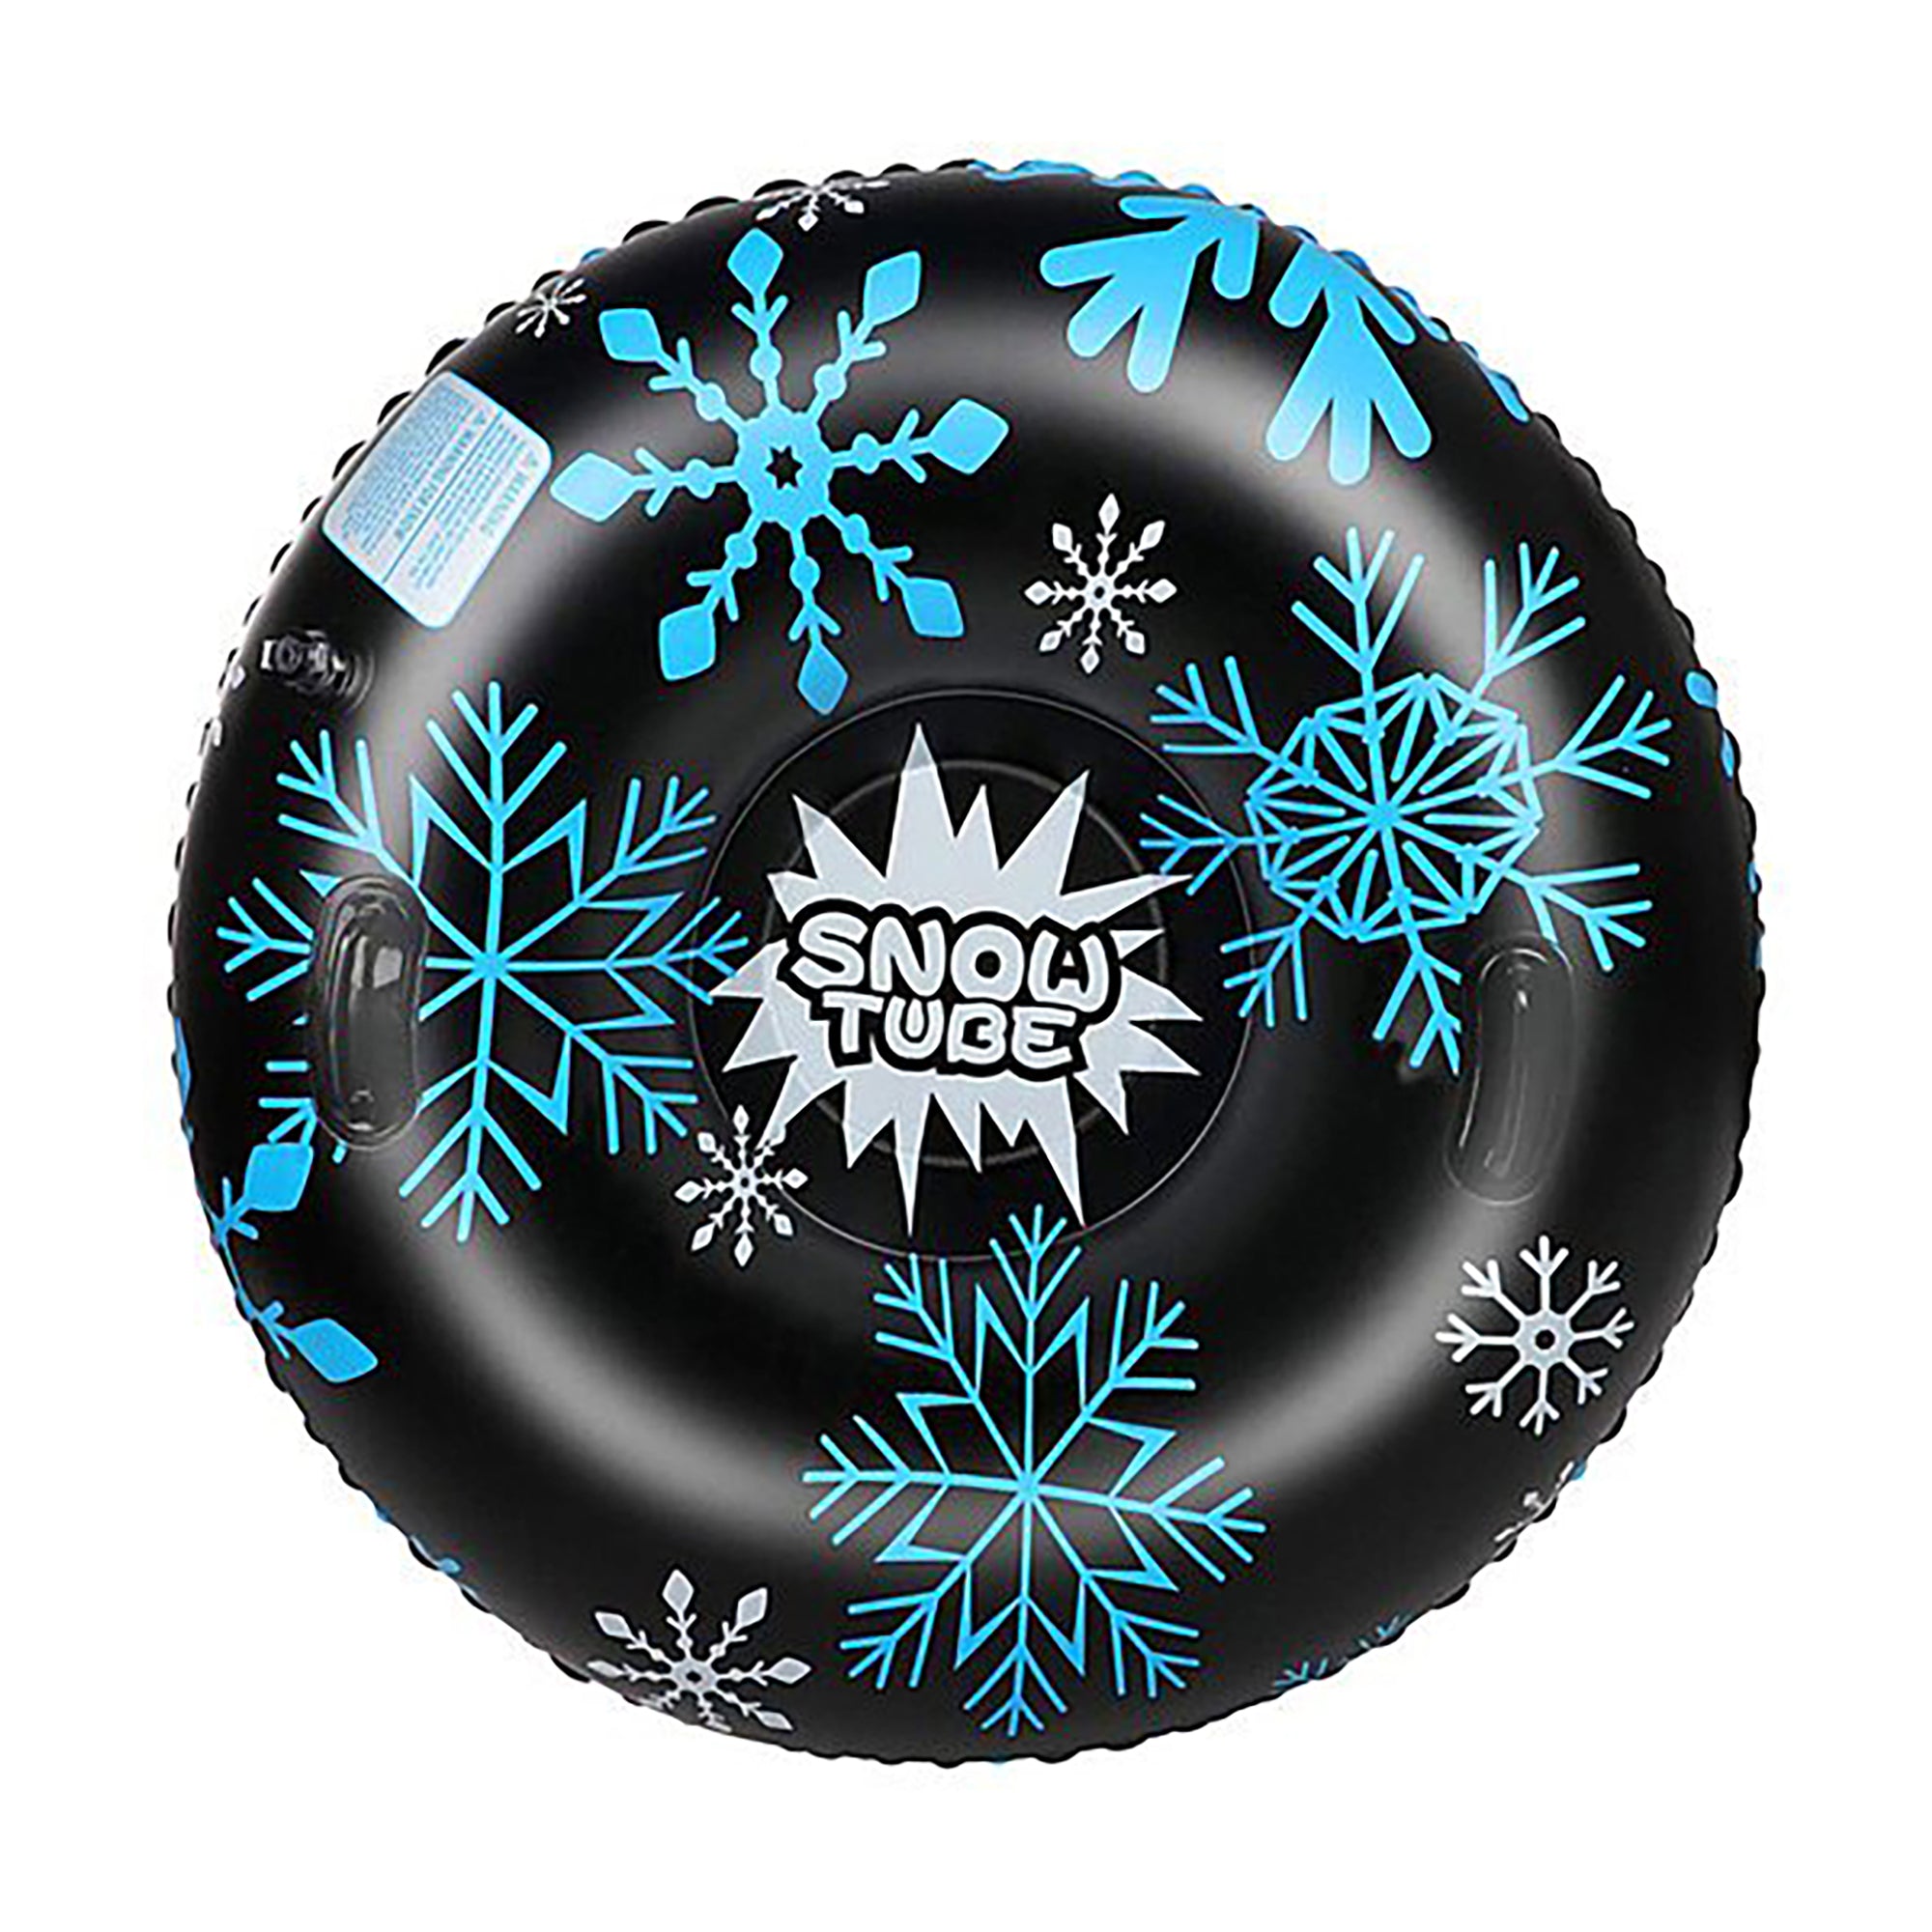 ''Black Snow Flake Inflatable Snow Tube 47''''''